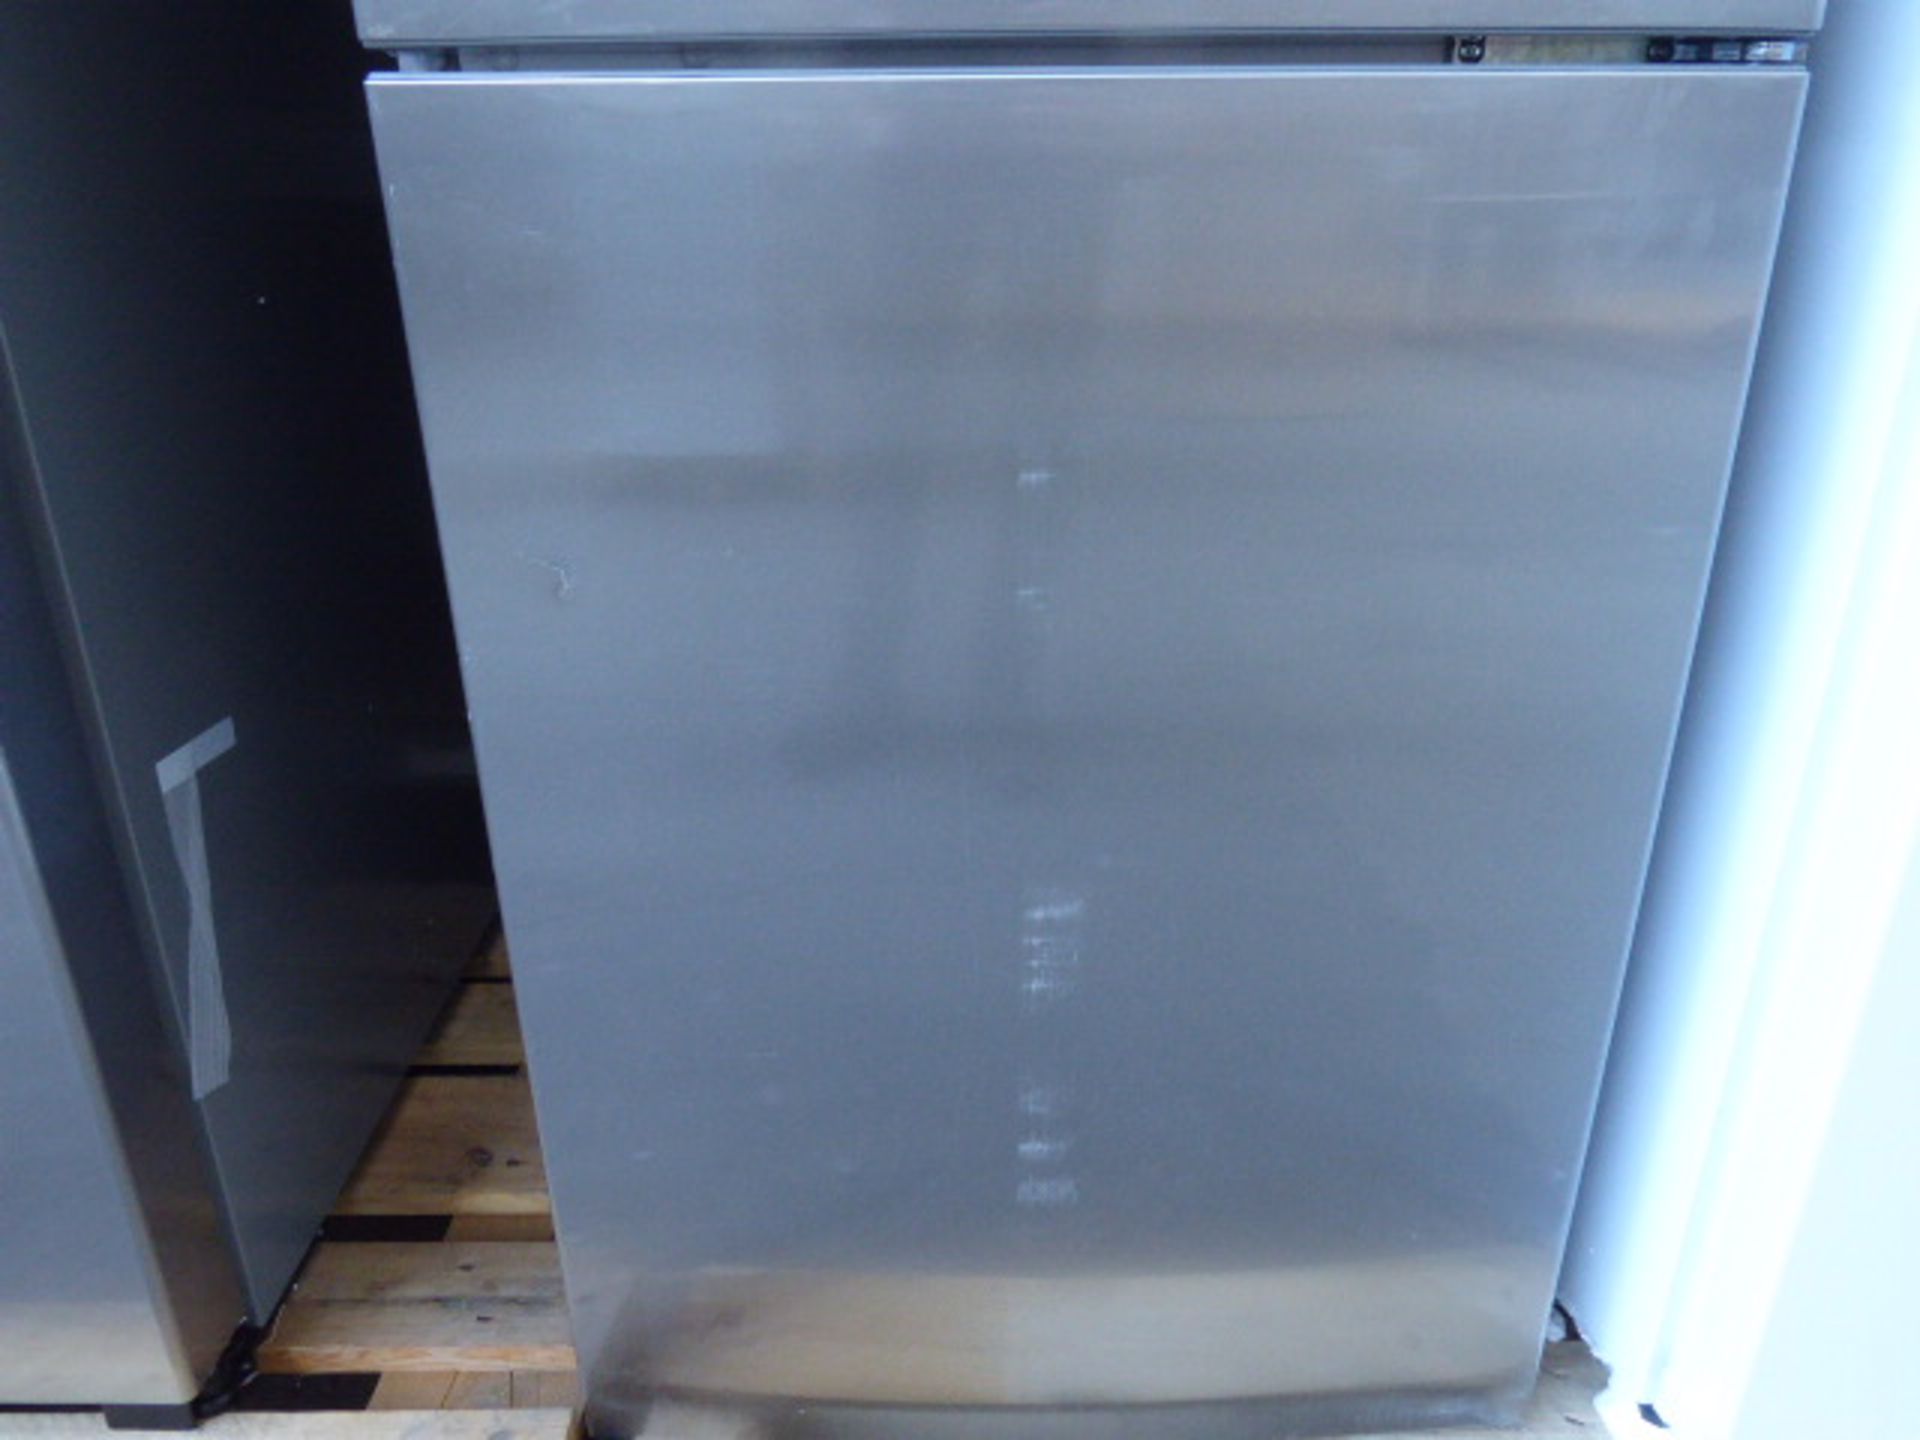 KG33VVIEAGB Siemens Free-standing fridge-freezer - Image 3 of 4